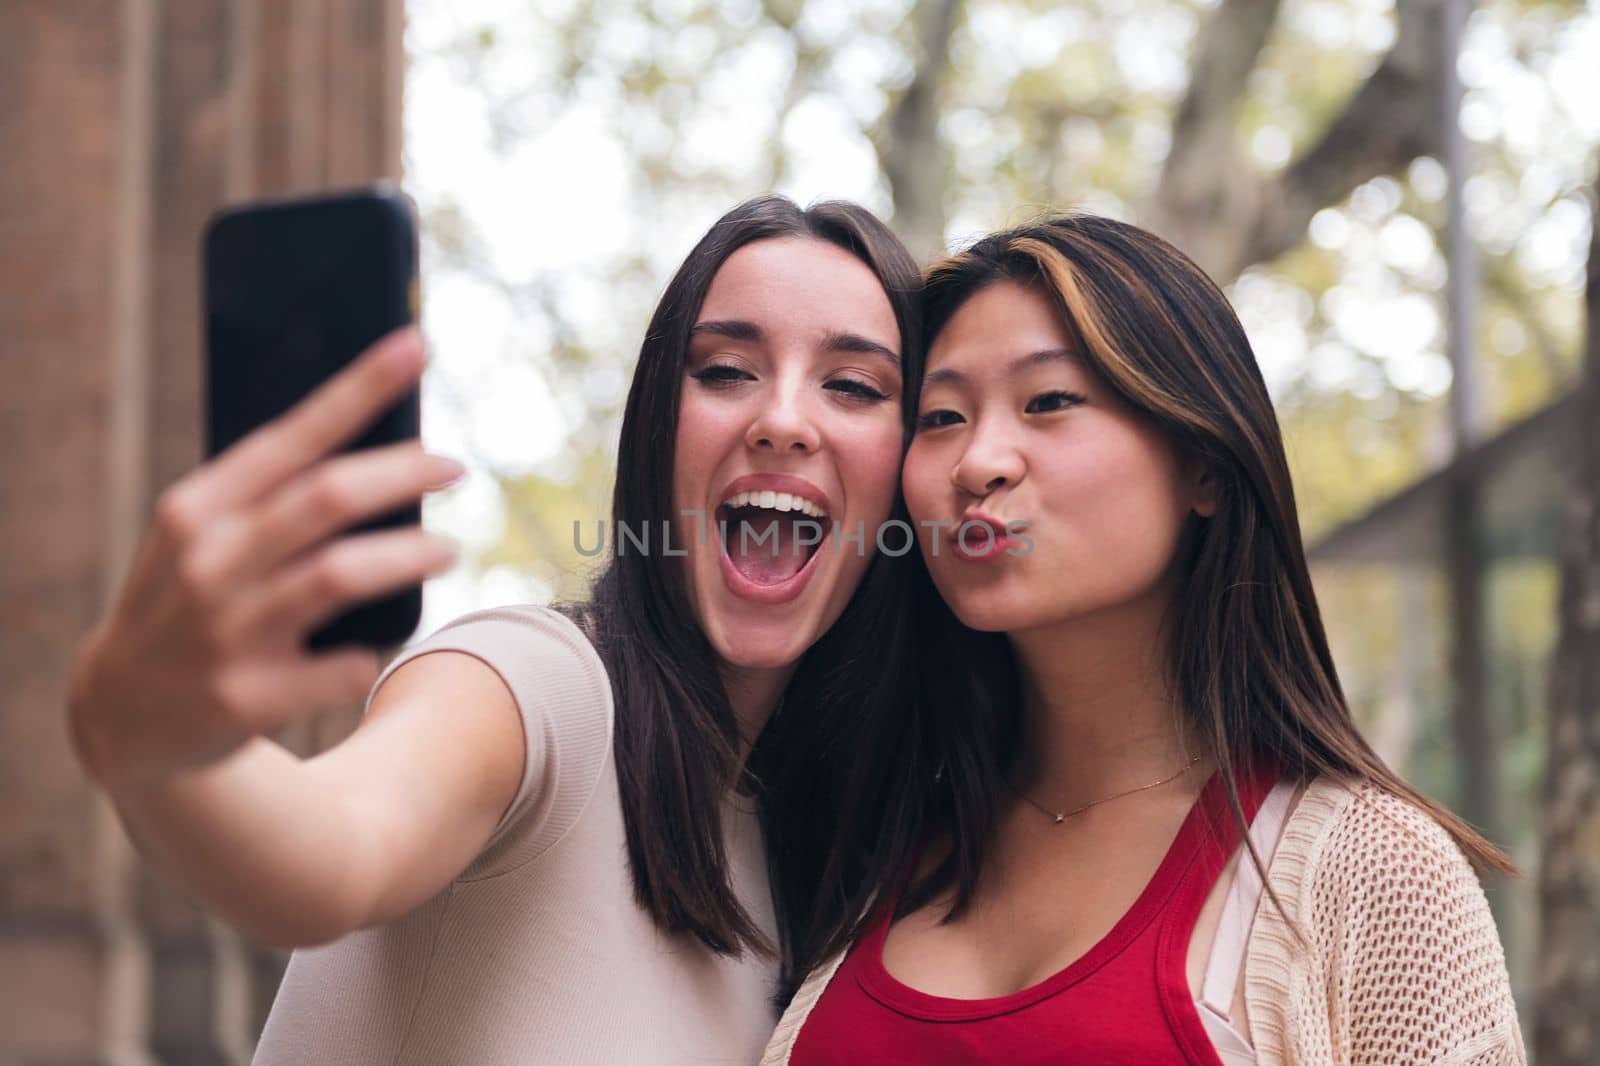 women smiling and having fun taking a selfie by raulmelldo